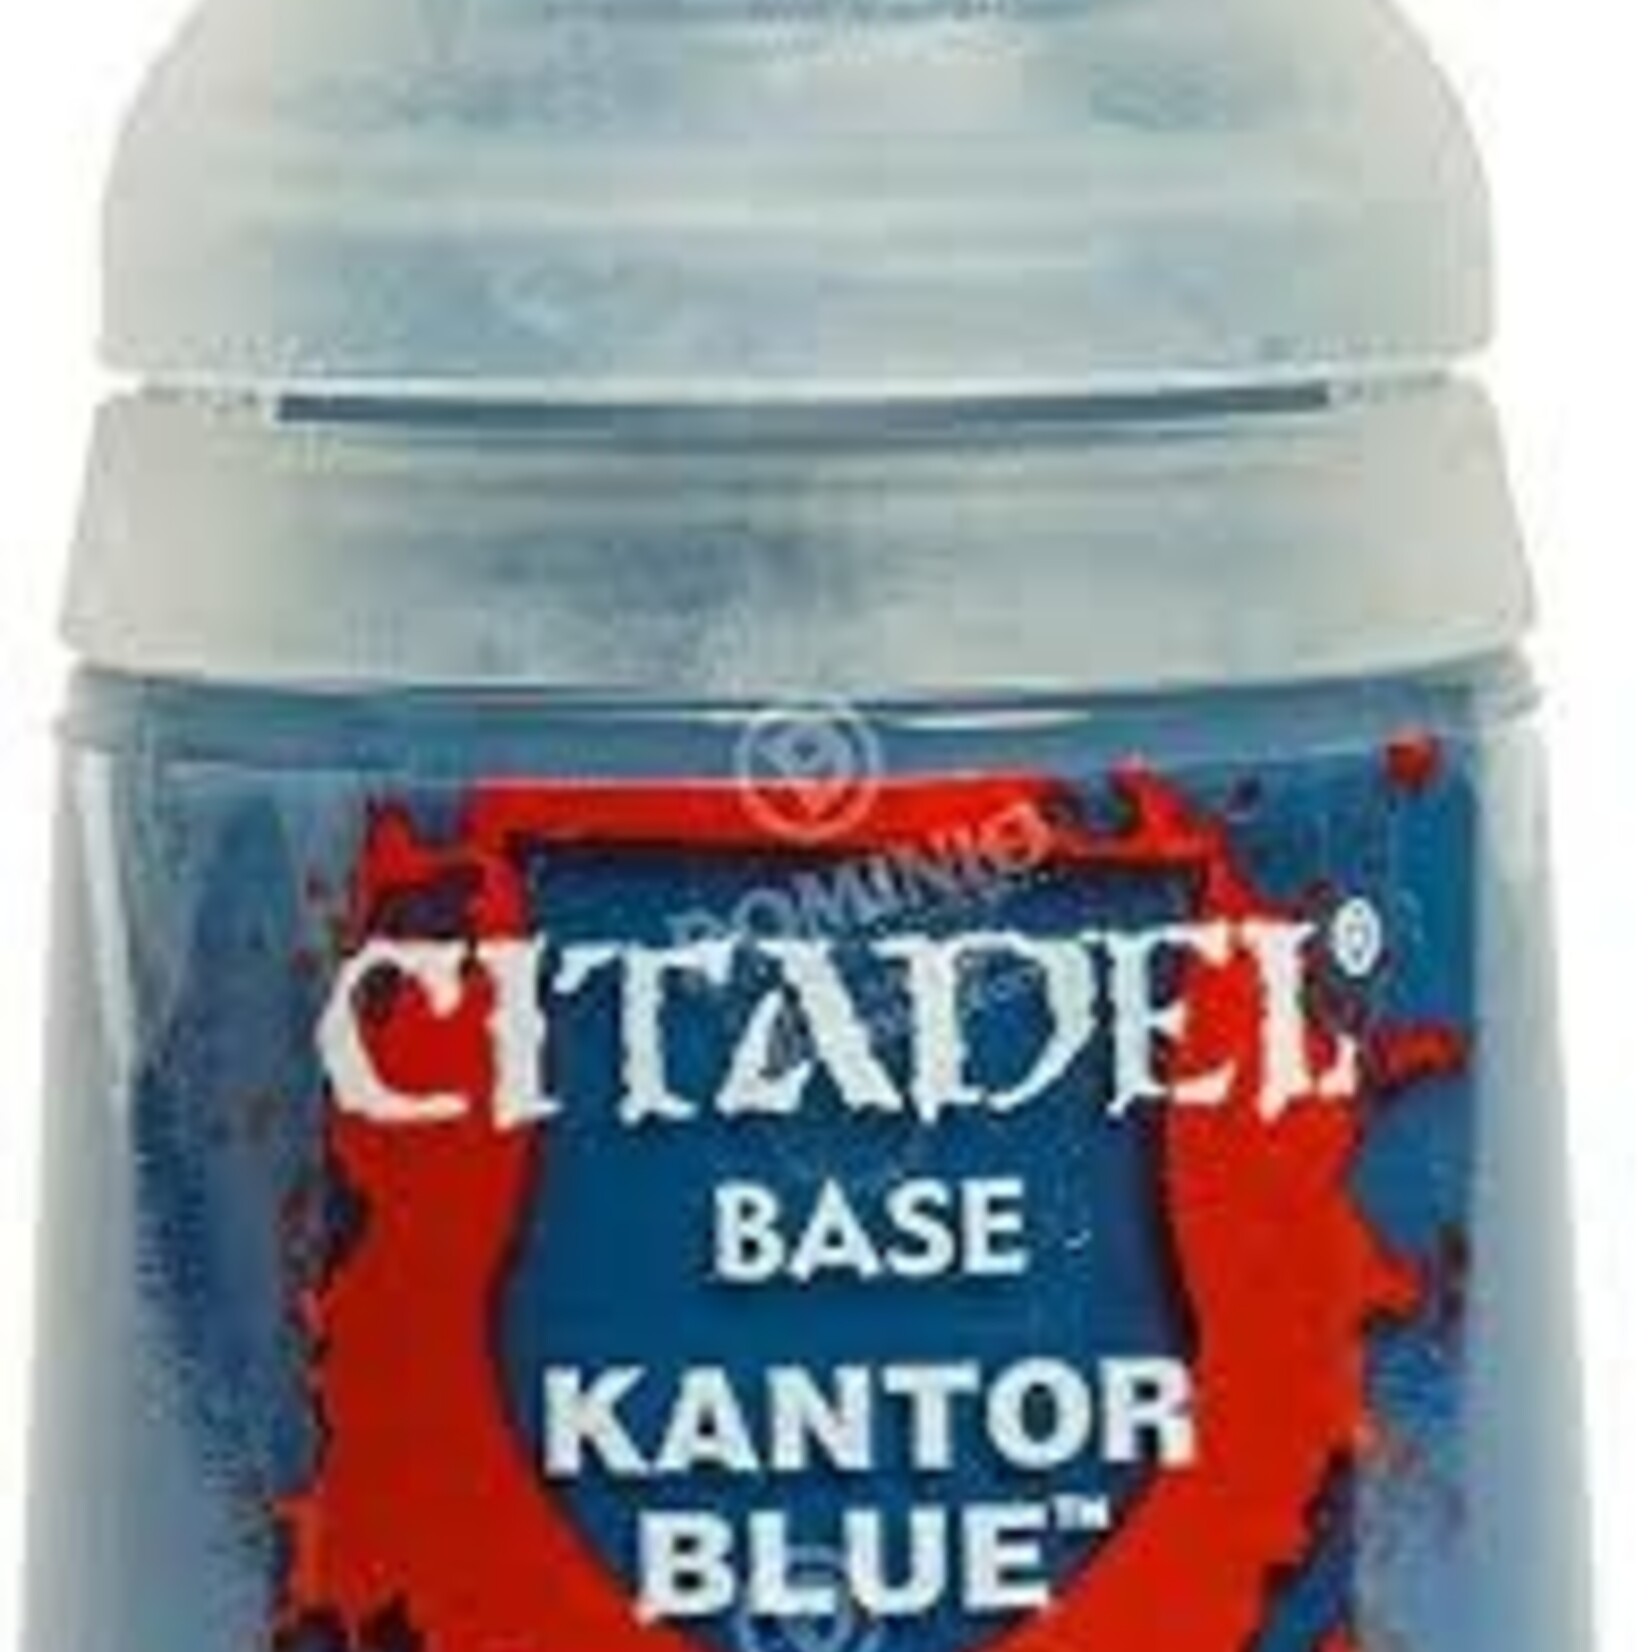 Citadel Citadel Paint - Base: Kantor Blue